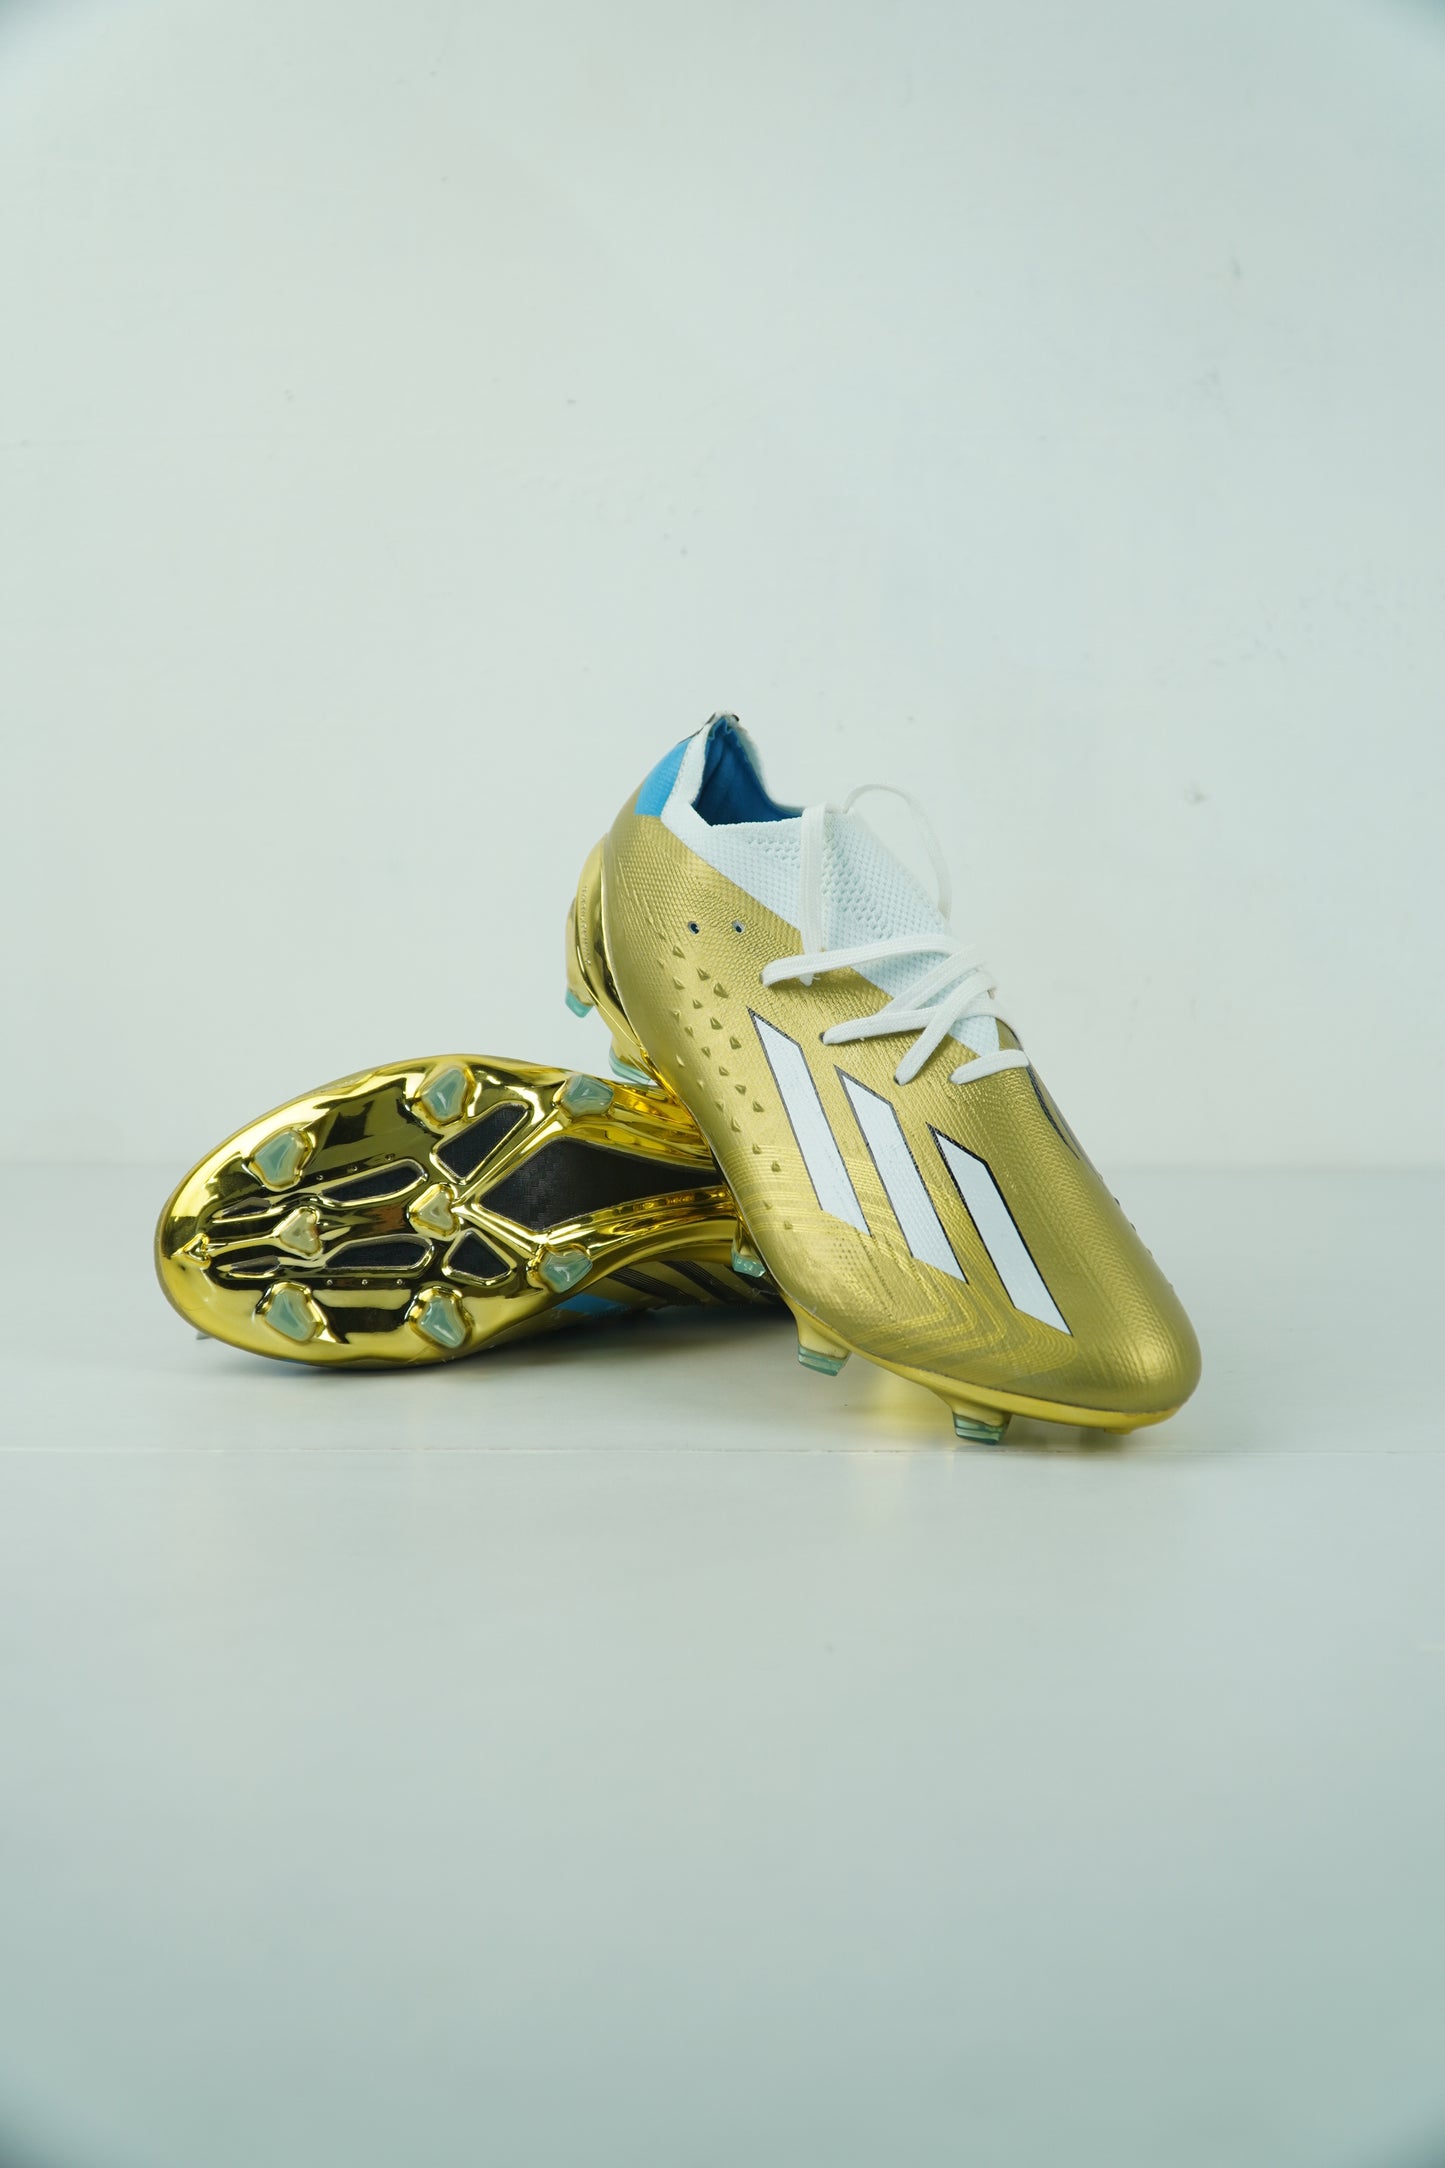 Adidas x Messi FG Gold Football Shoes